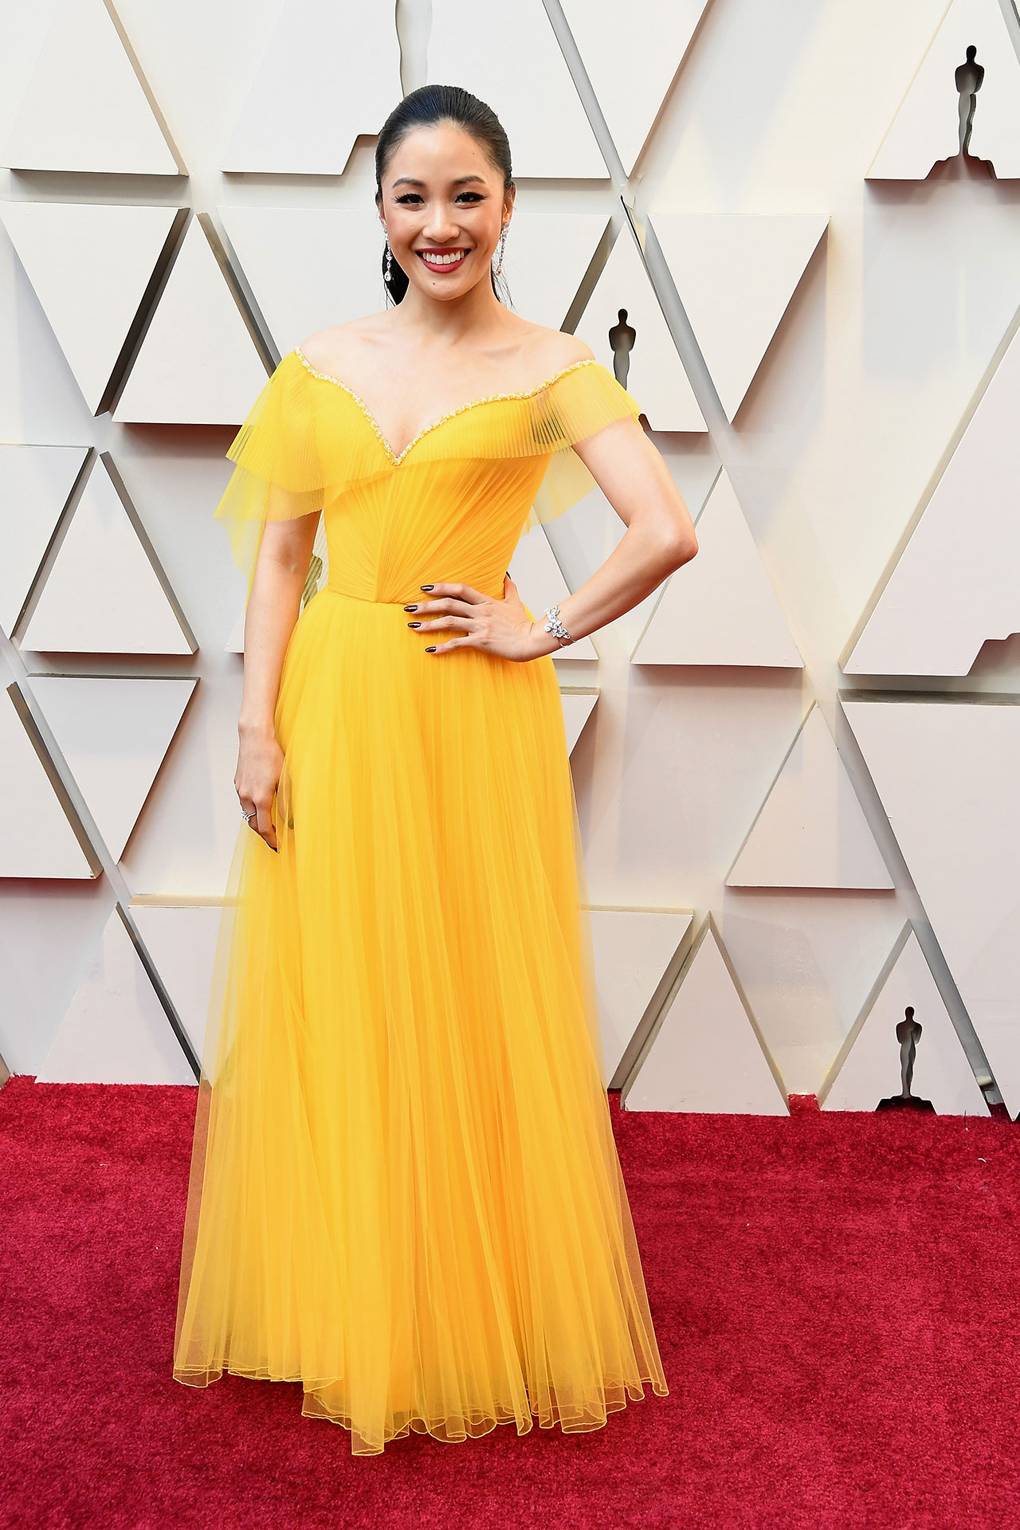 Oscars Best Dressed 2019 - Constance Wu in Versace